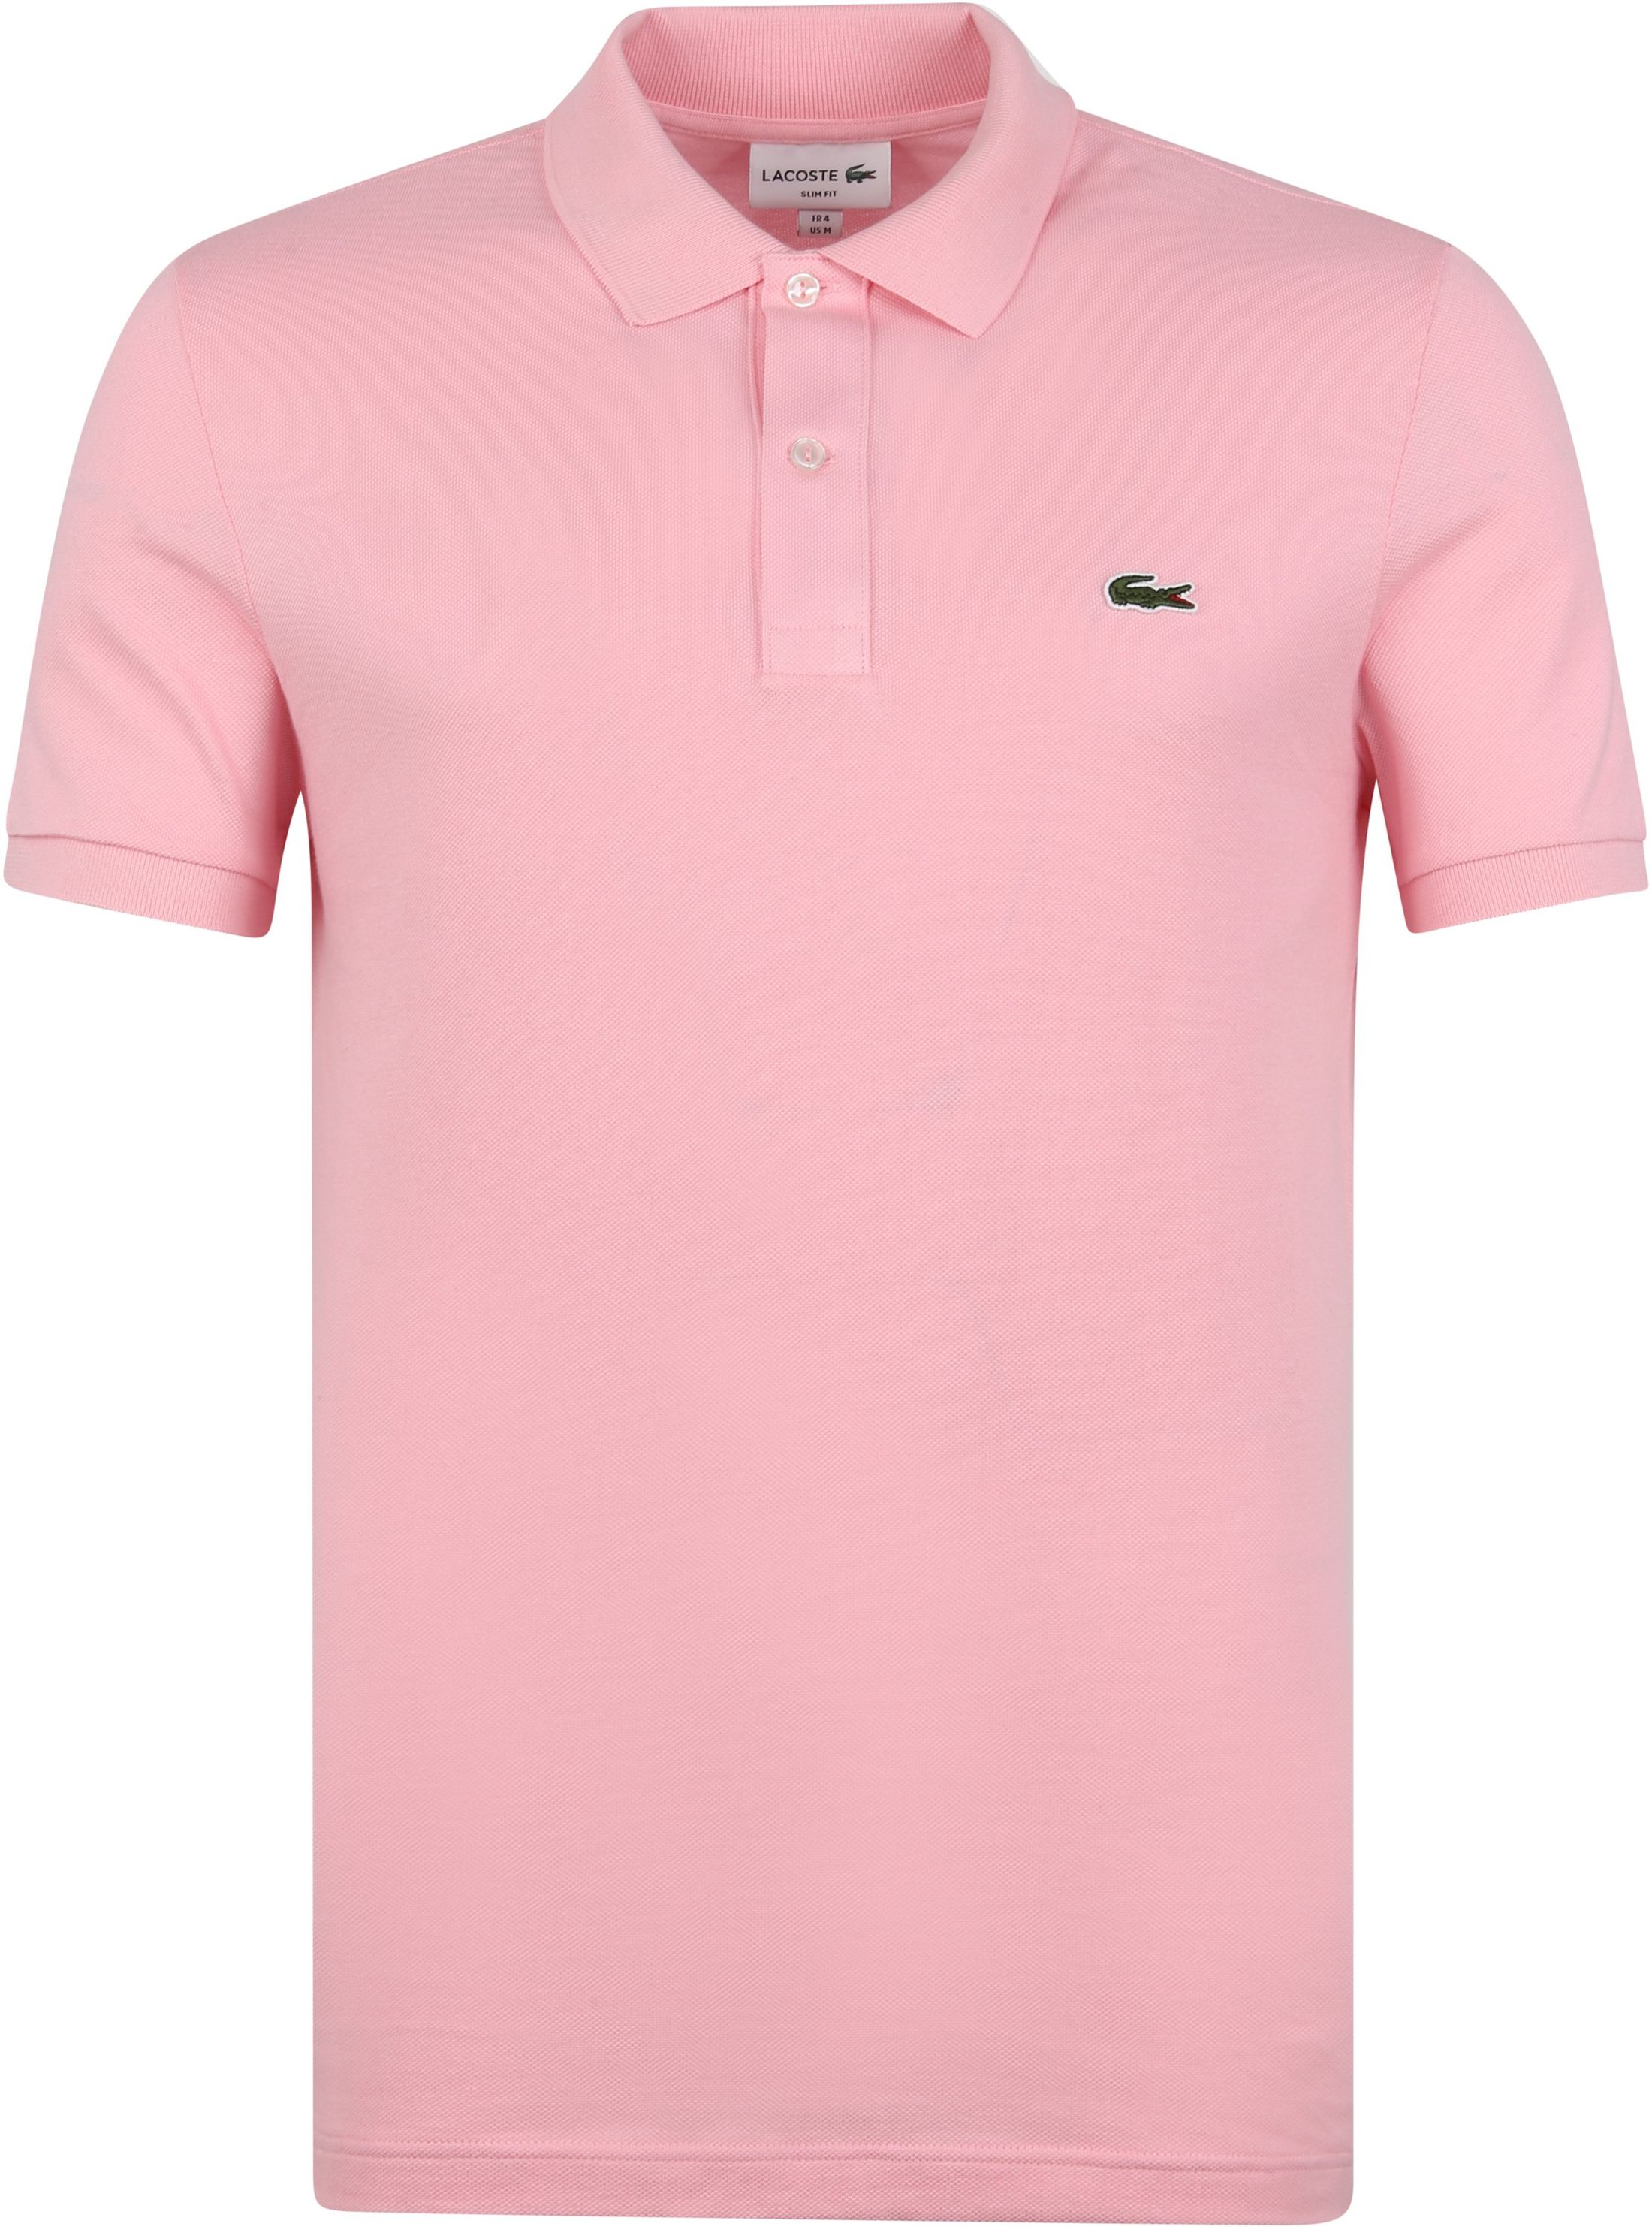 Lacoste Polo Shirt Pique Pink size 3XL